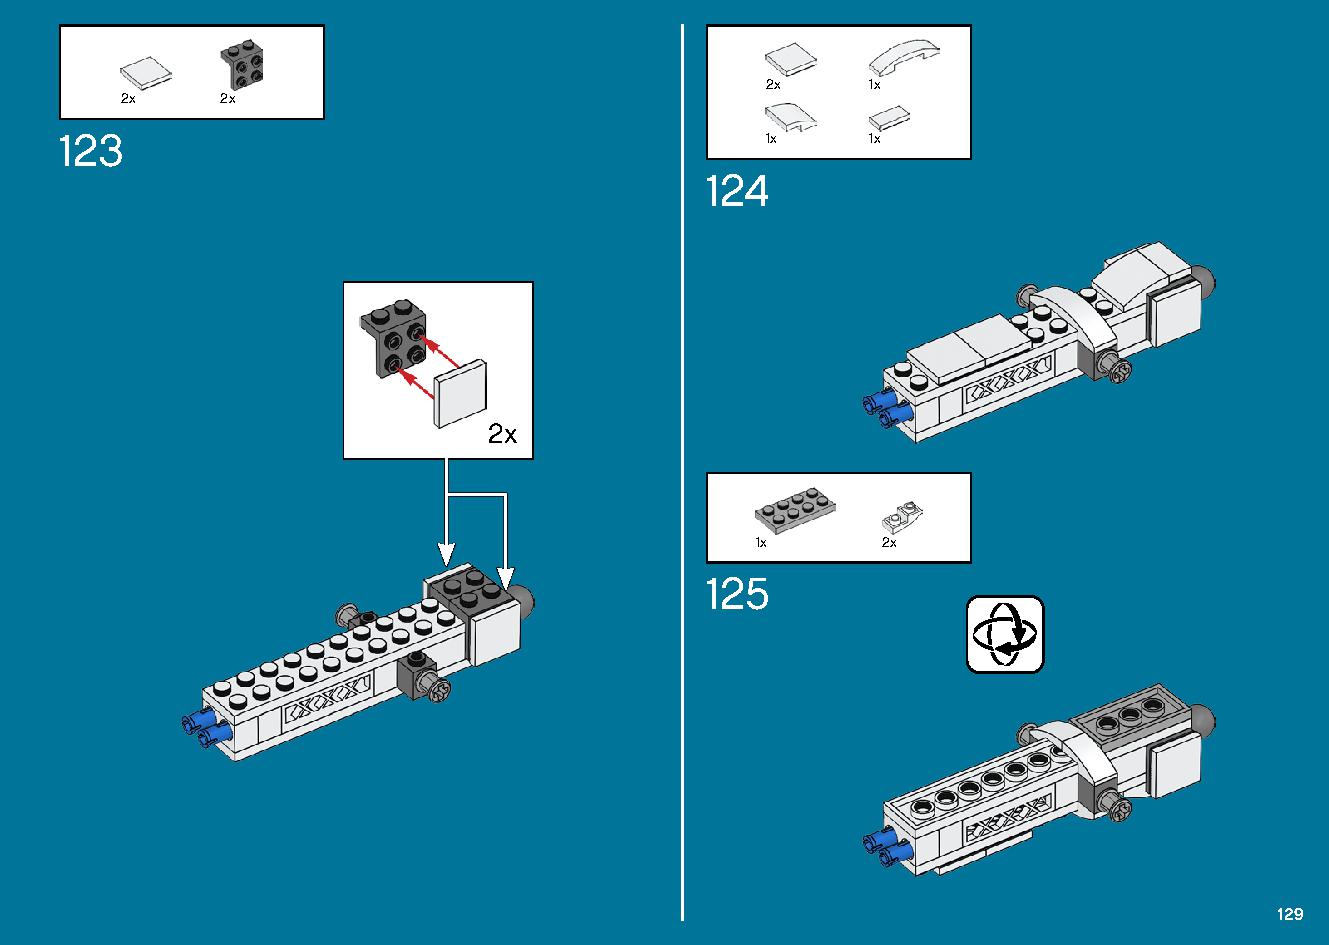 International Space Station 21321 レゴの商品情報 レゴの説明書・組立方法 129 page